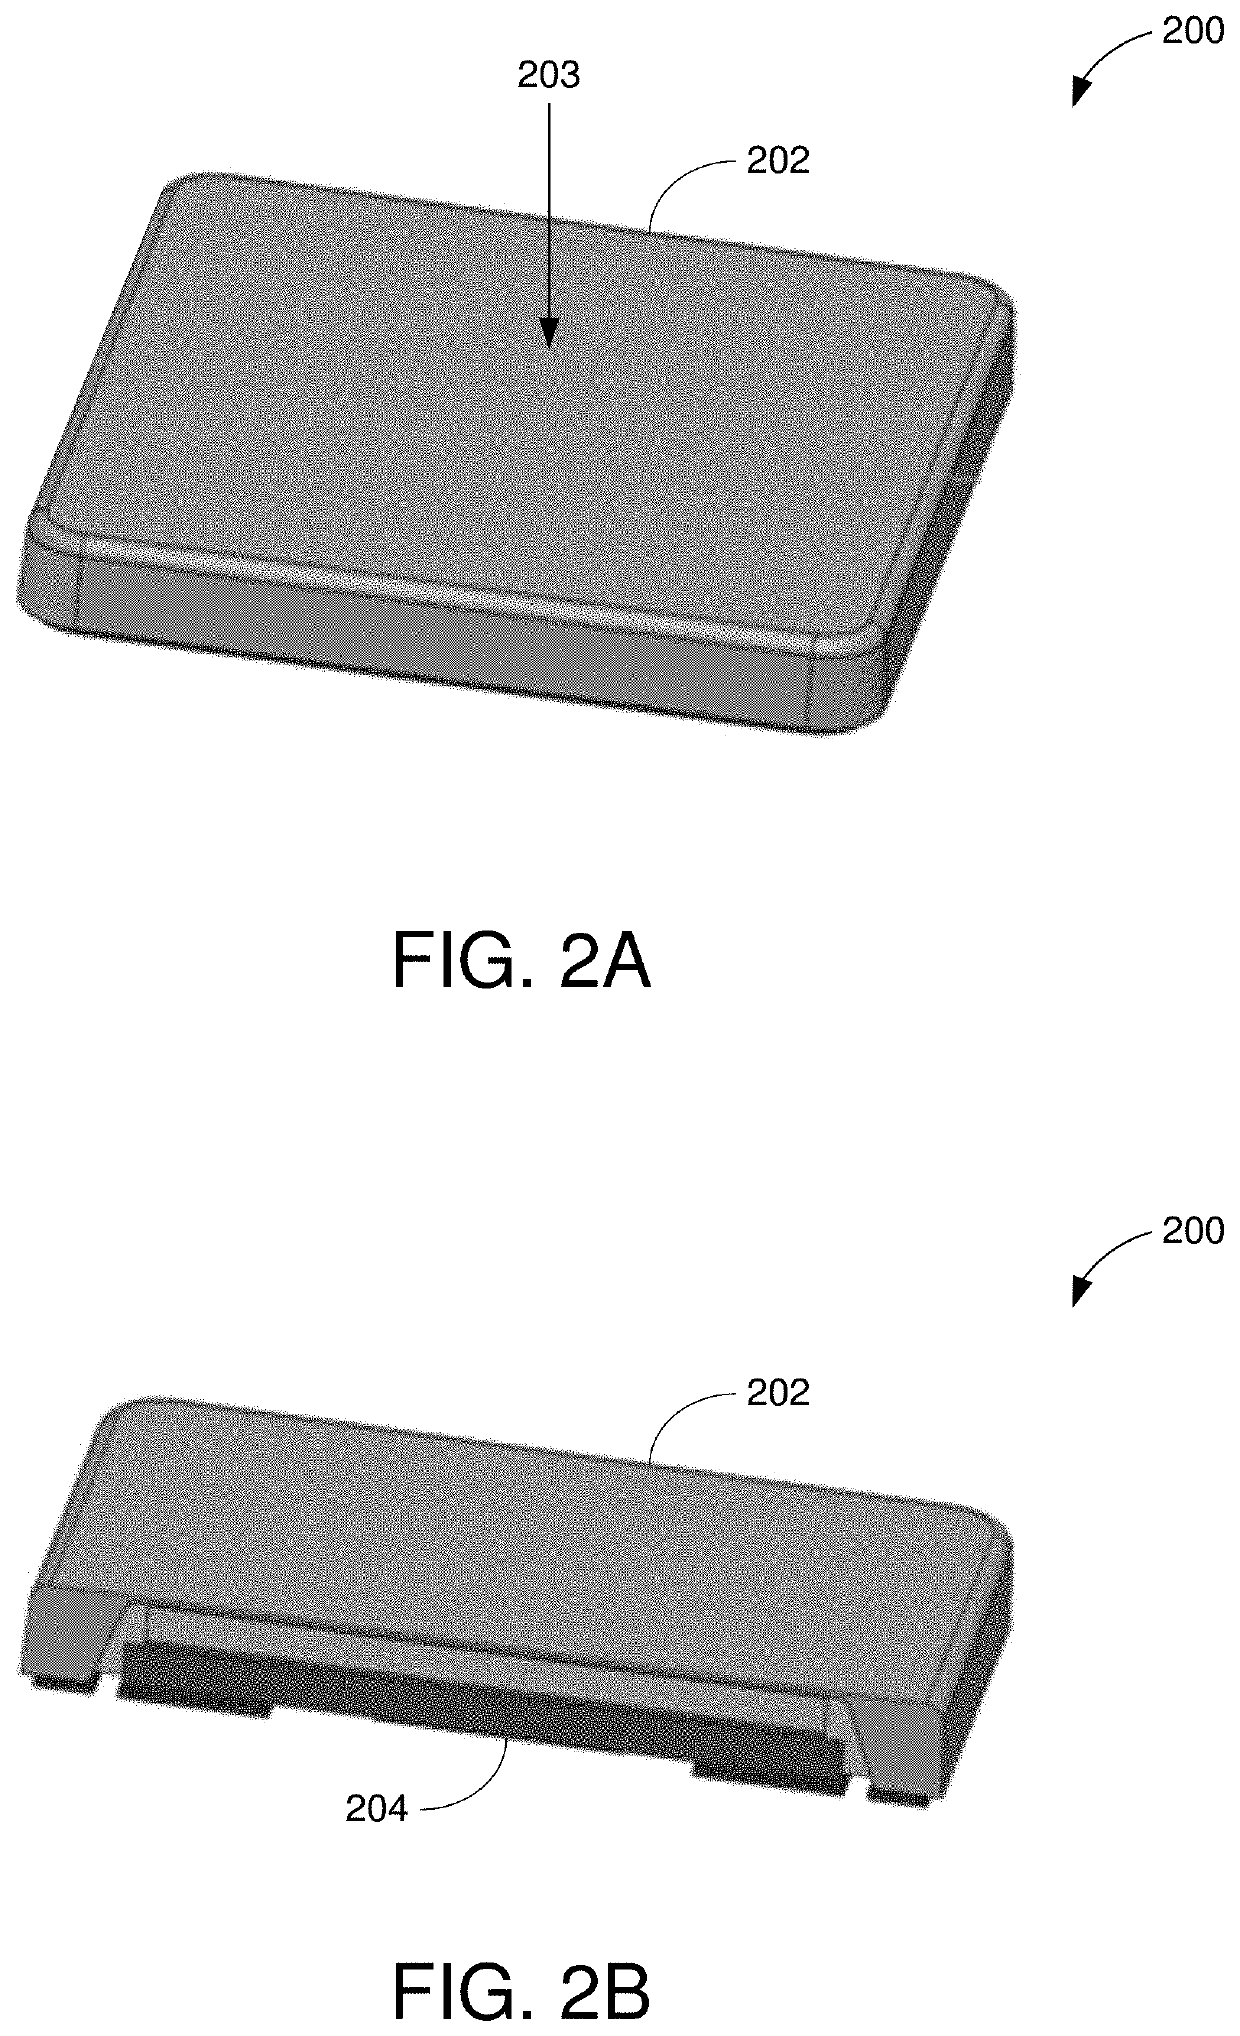 Fingerprint sensor housing with non-uniform thickness